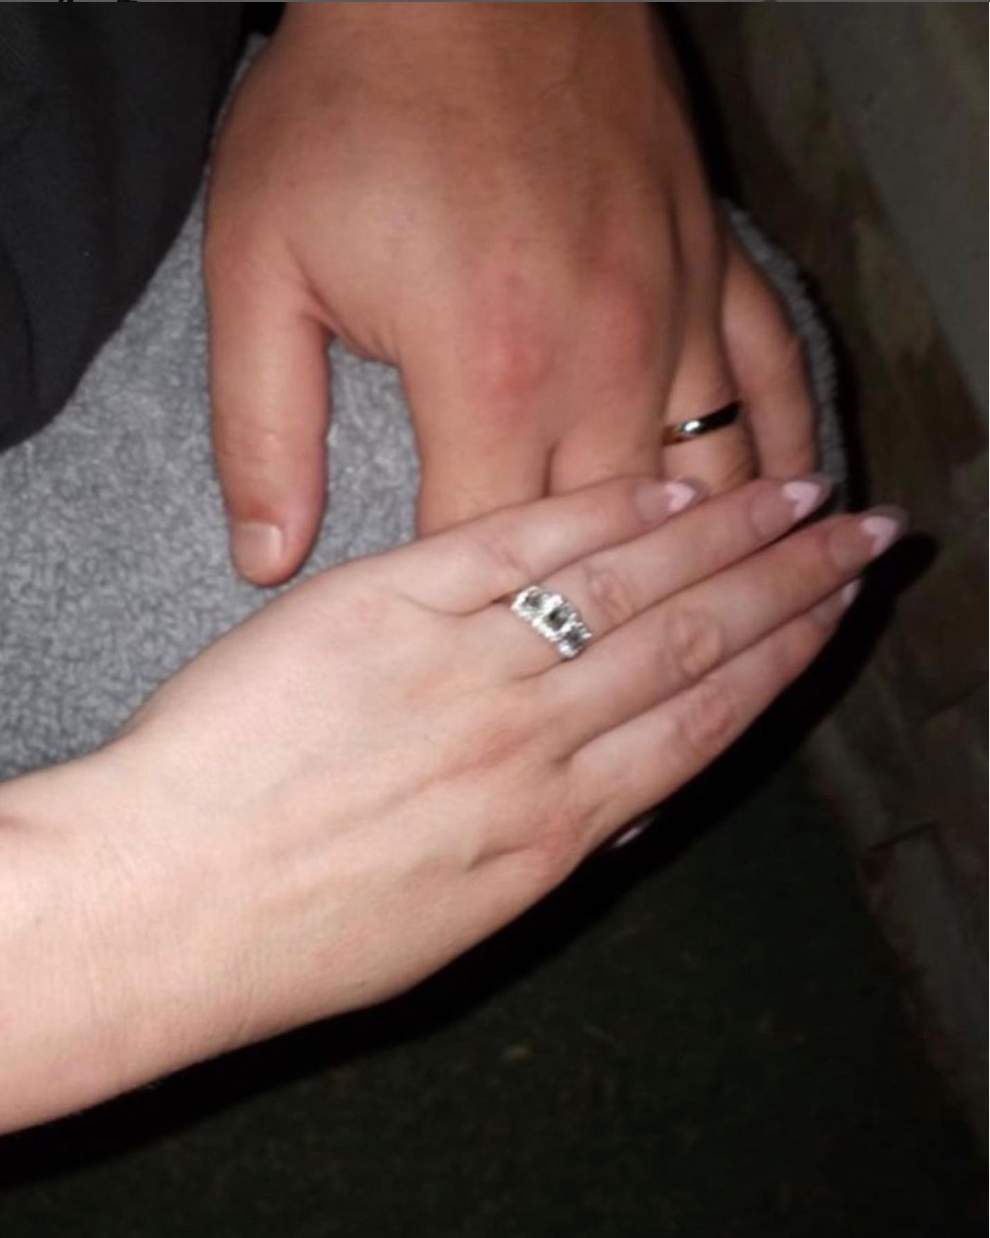 Amanda Bynes wearing wedding ring